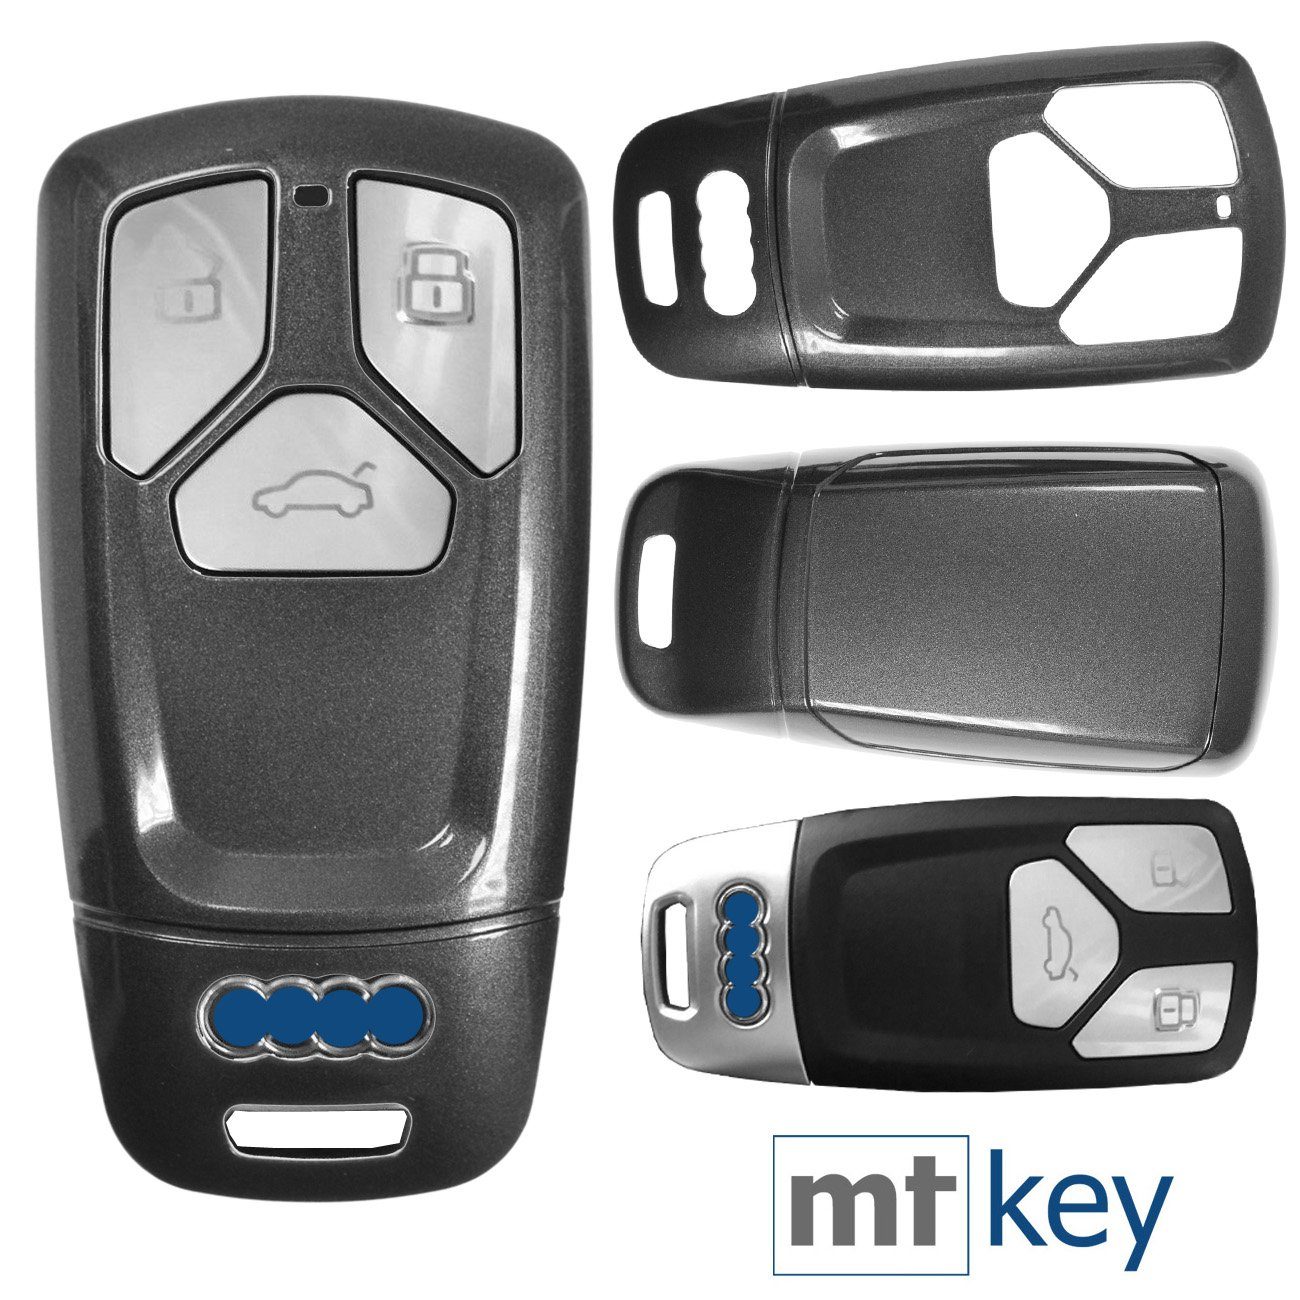 mt-key Schlüsseltasche Autoschlüssel Hardcover Schutzhülle Metallic Grau, für Audi A4 A5 A6 A7 TT Q2 Q5 Q7 A8 Q8 KEYLESS SMARTKEY